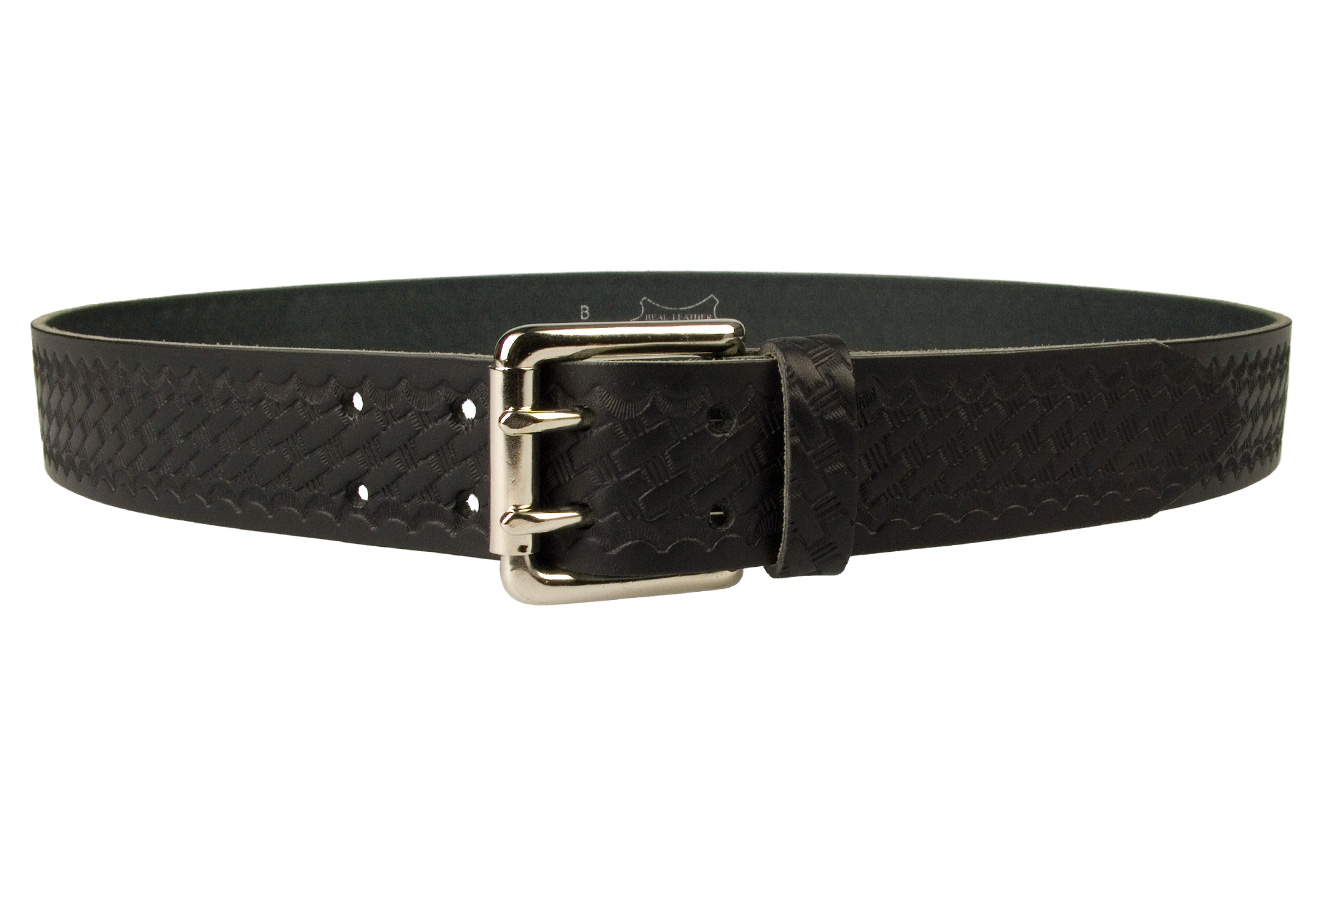 American Style Basketweave Embossed Leather Duty Belt MADE IN UK - Belt Designs